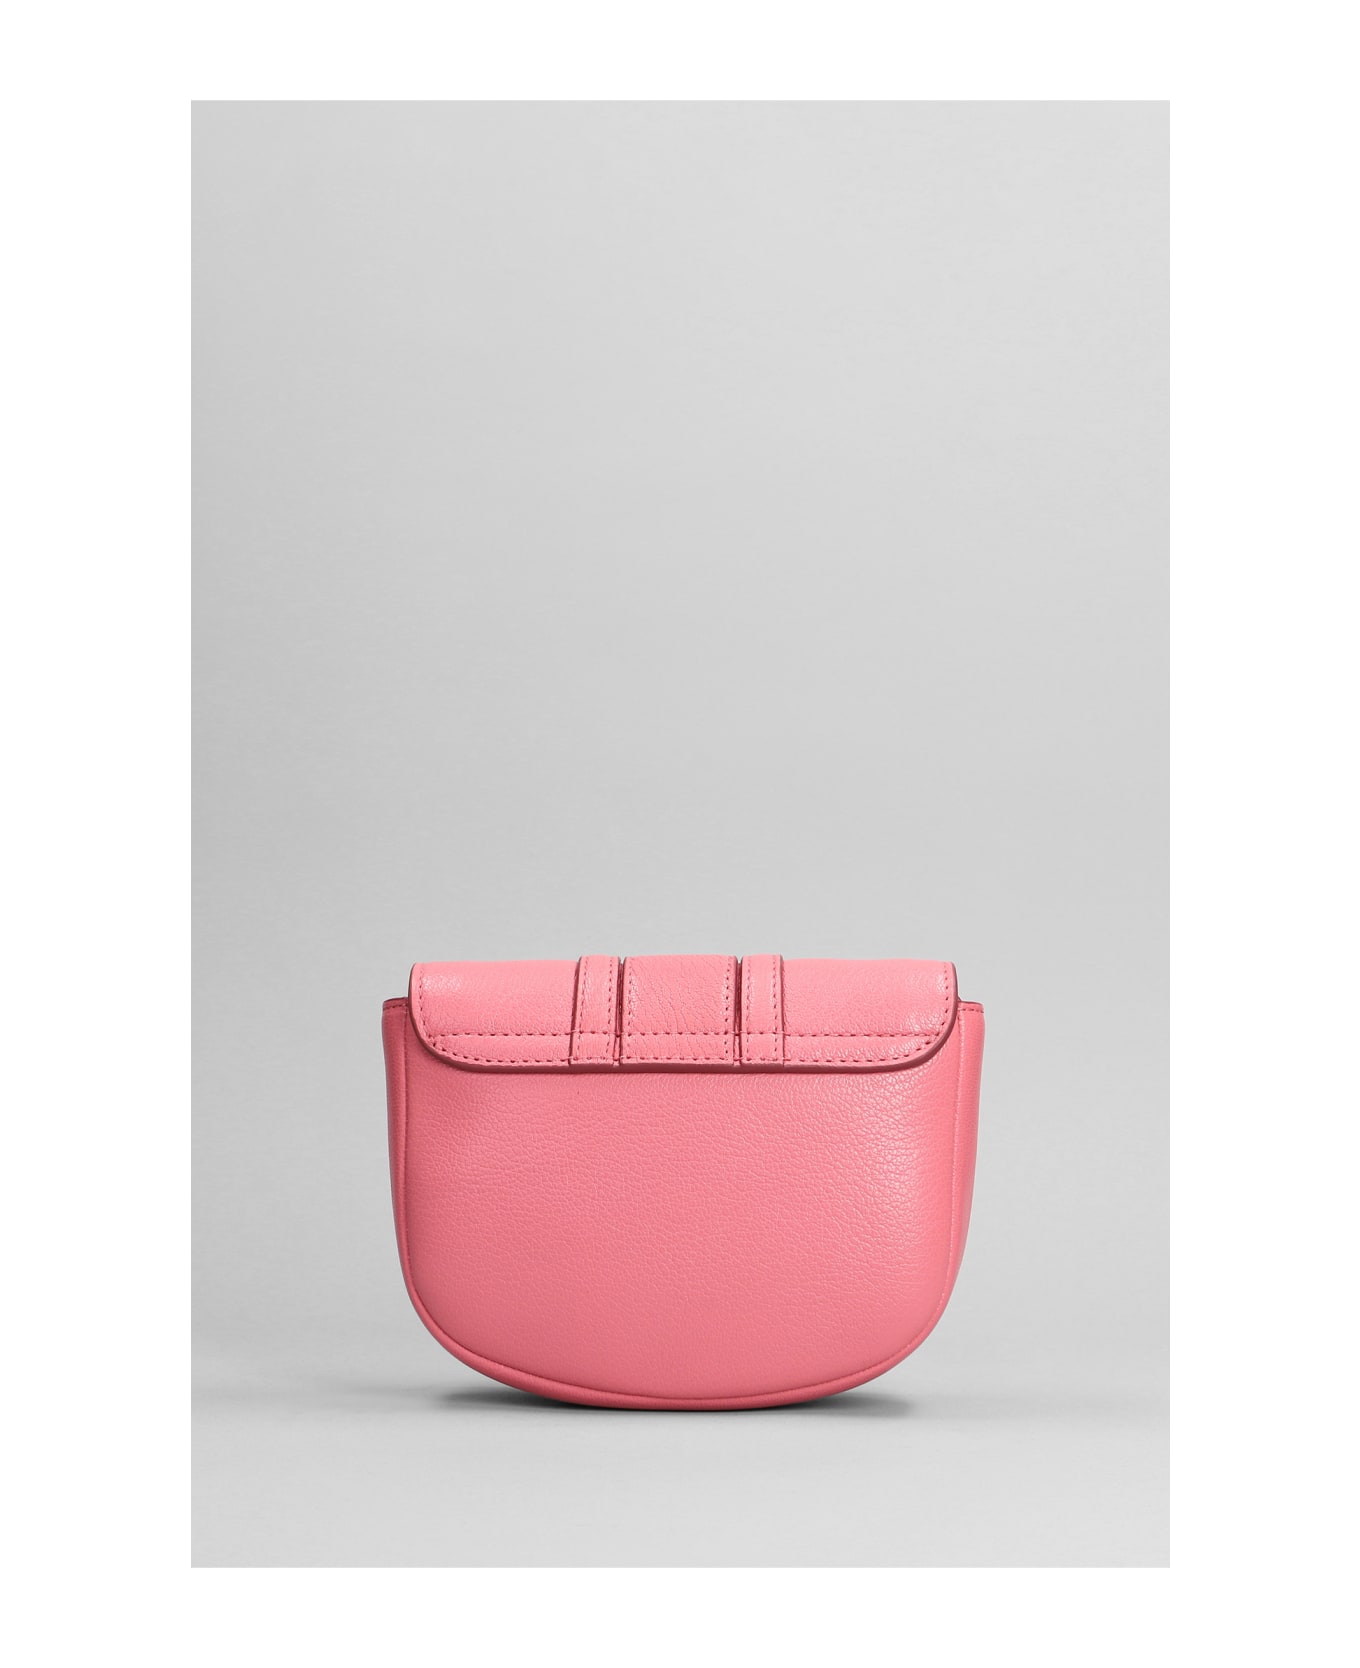 See by Chloé Hana Mini Shoulder Bag In Rose-pink Leather - rose-pink